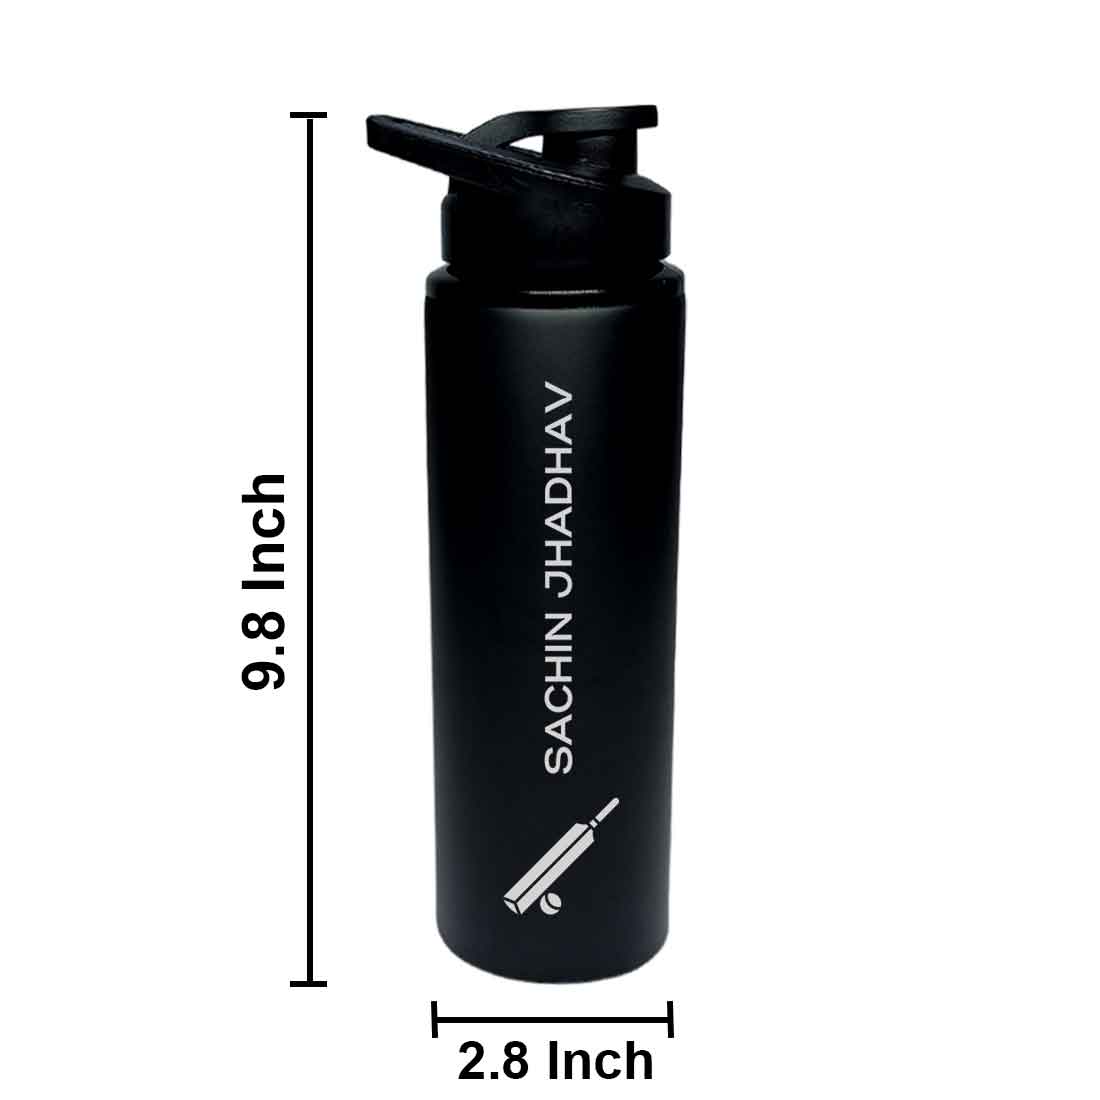 Custom Laser Engraving Water Bottle Sipper for Drinking - Cricket Love